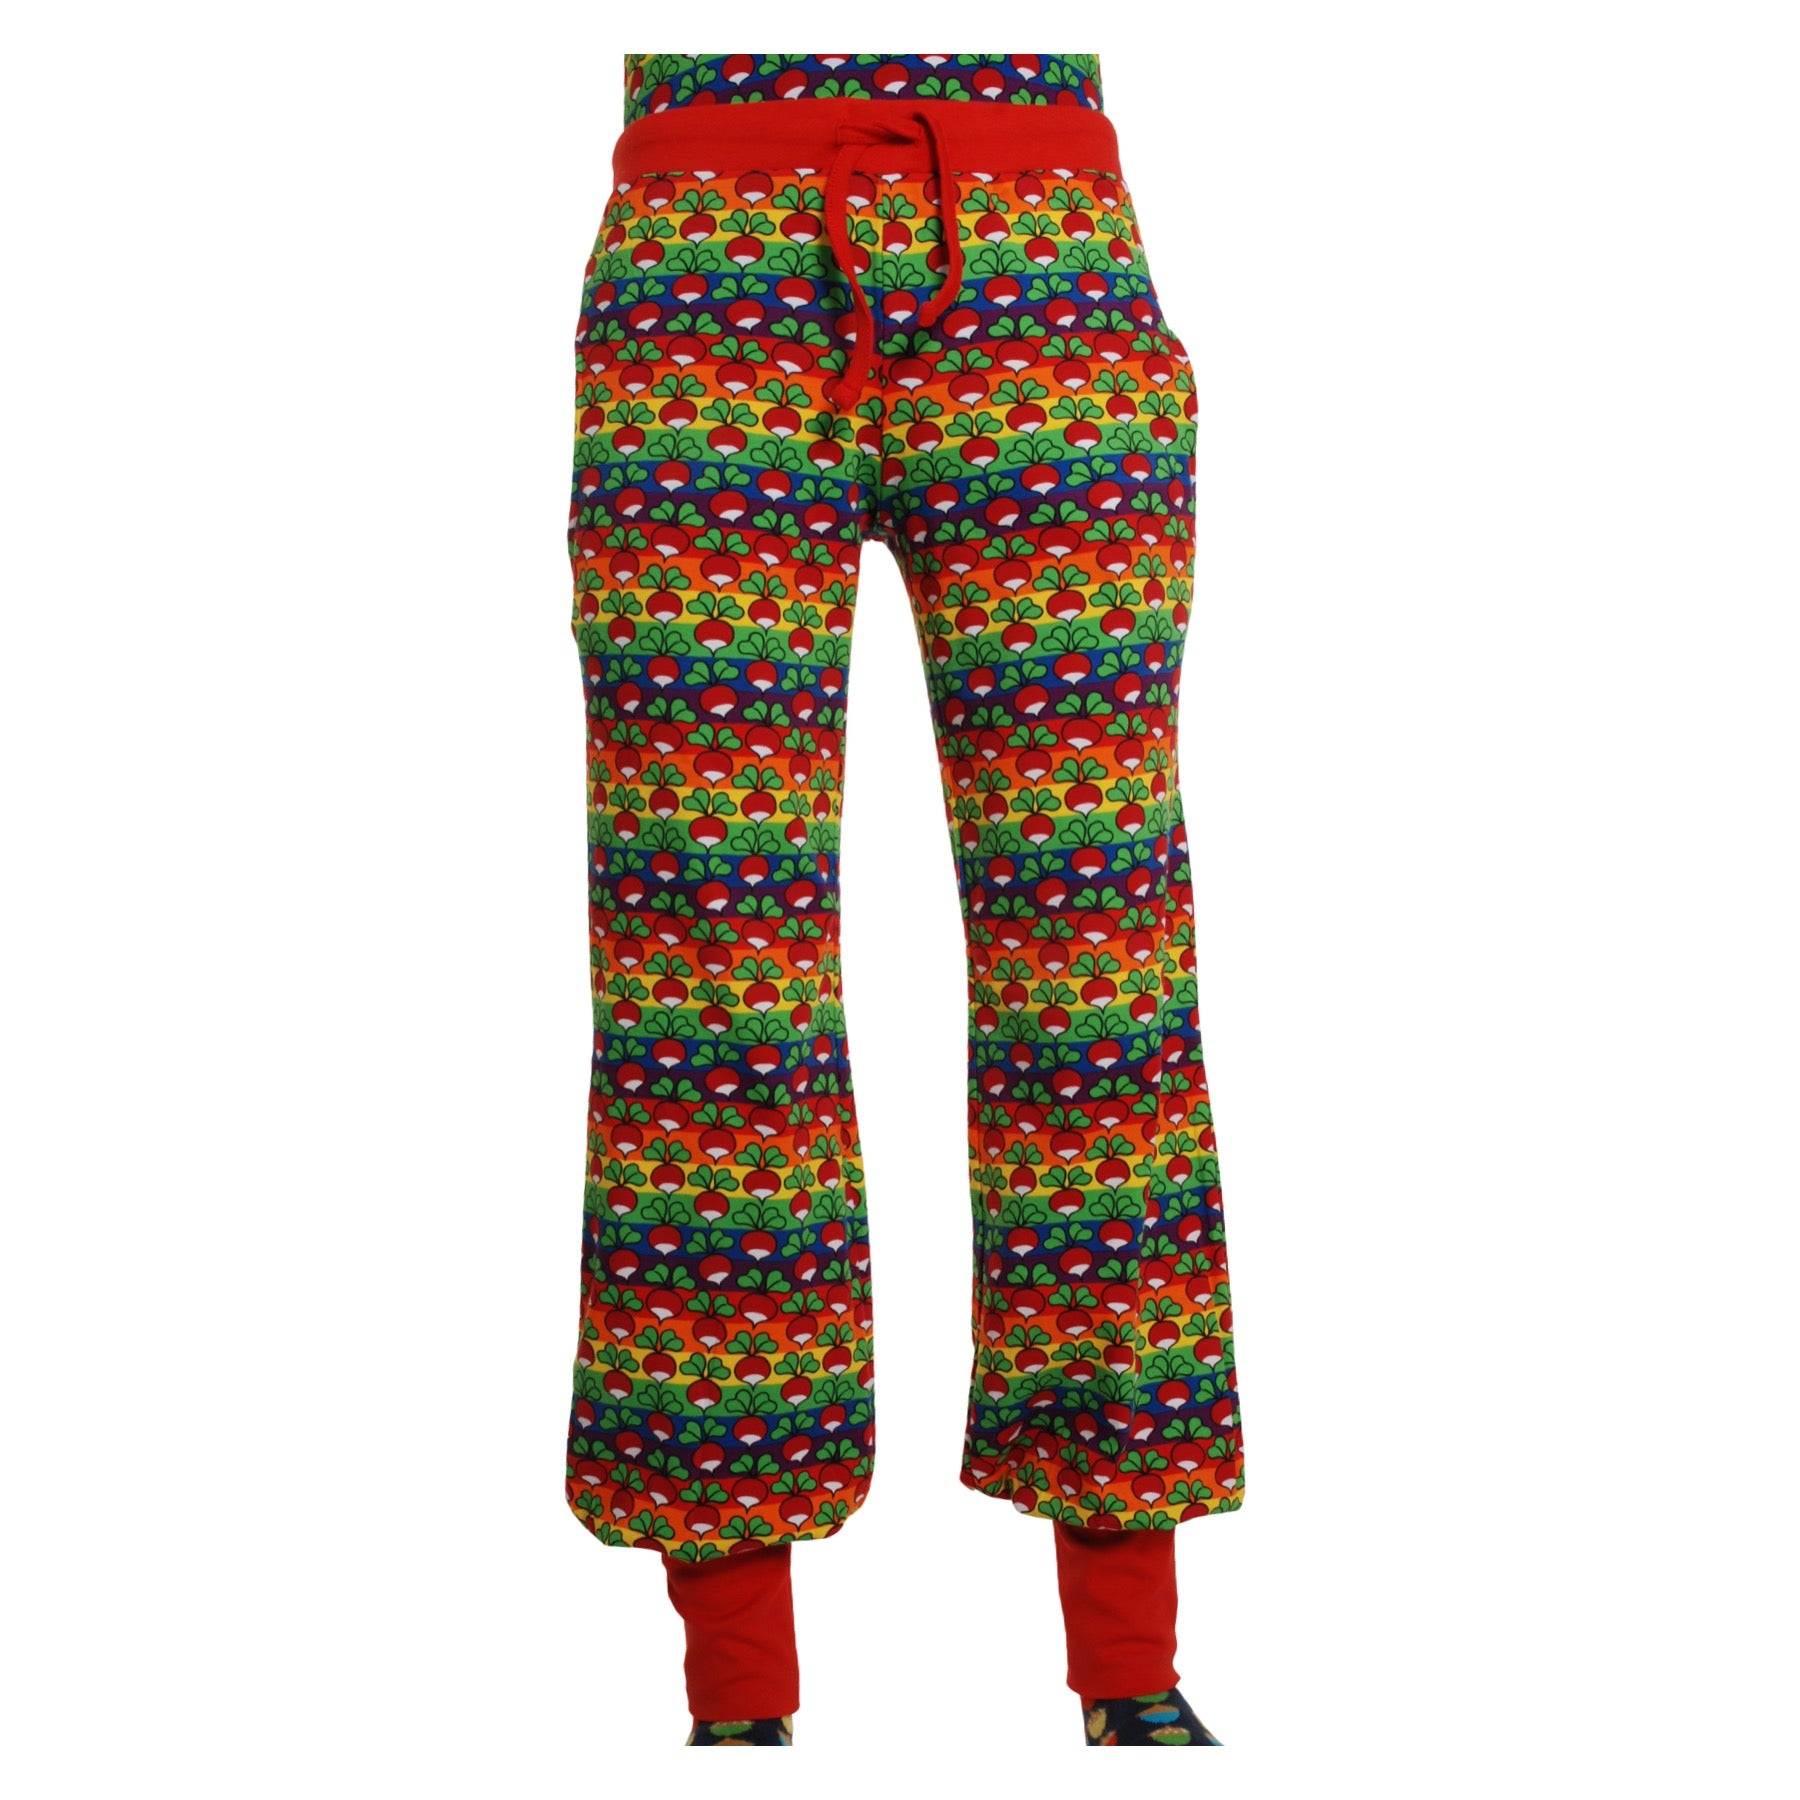 DUNS Sweden Baggy Pants Radish Rainbow Stripe (Adult)